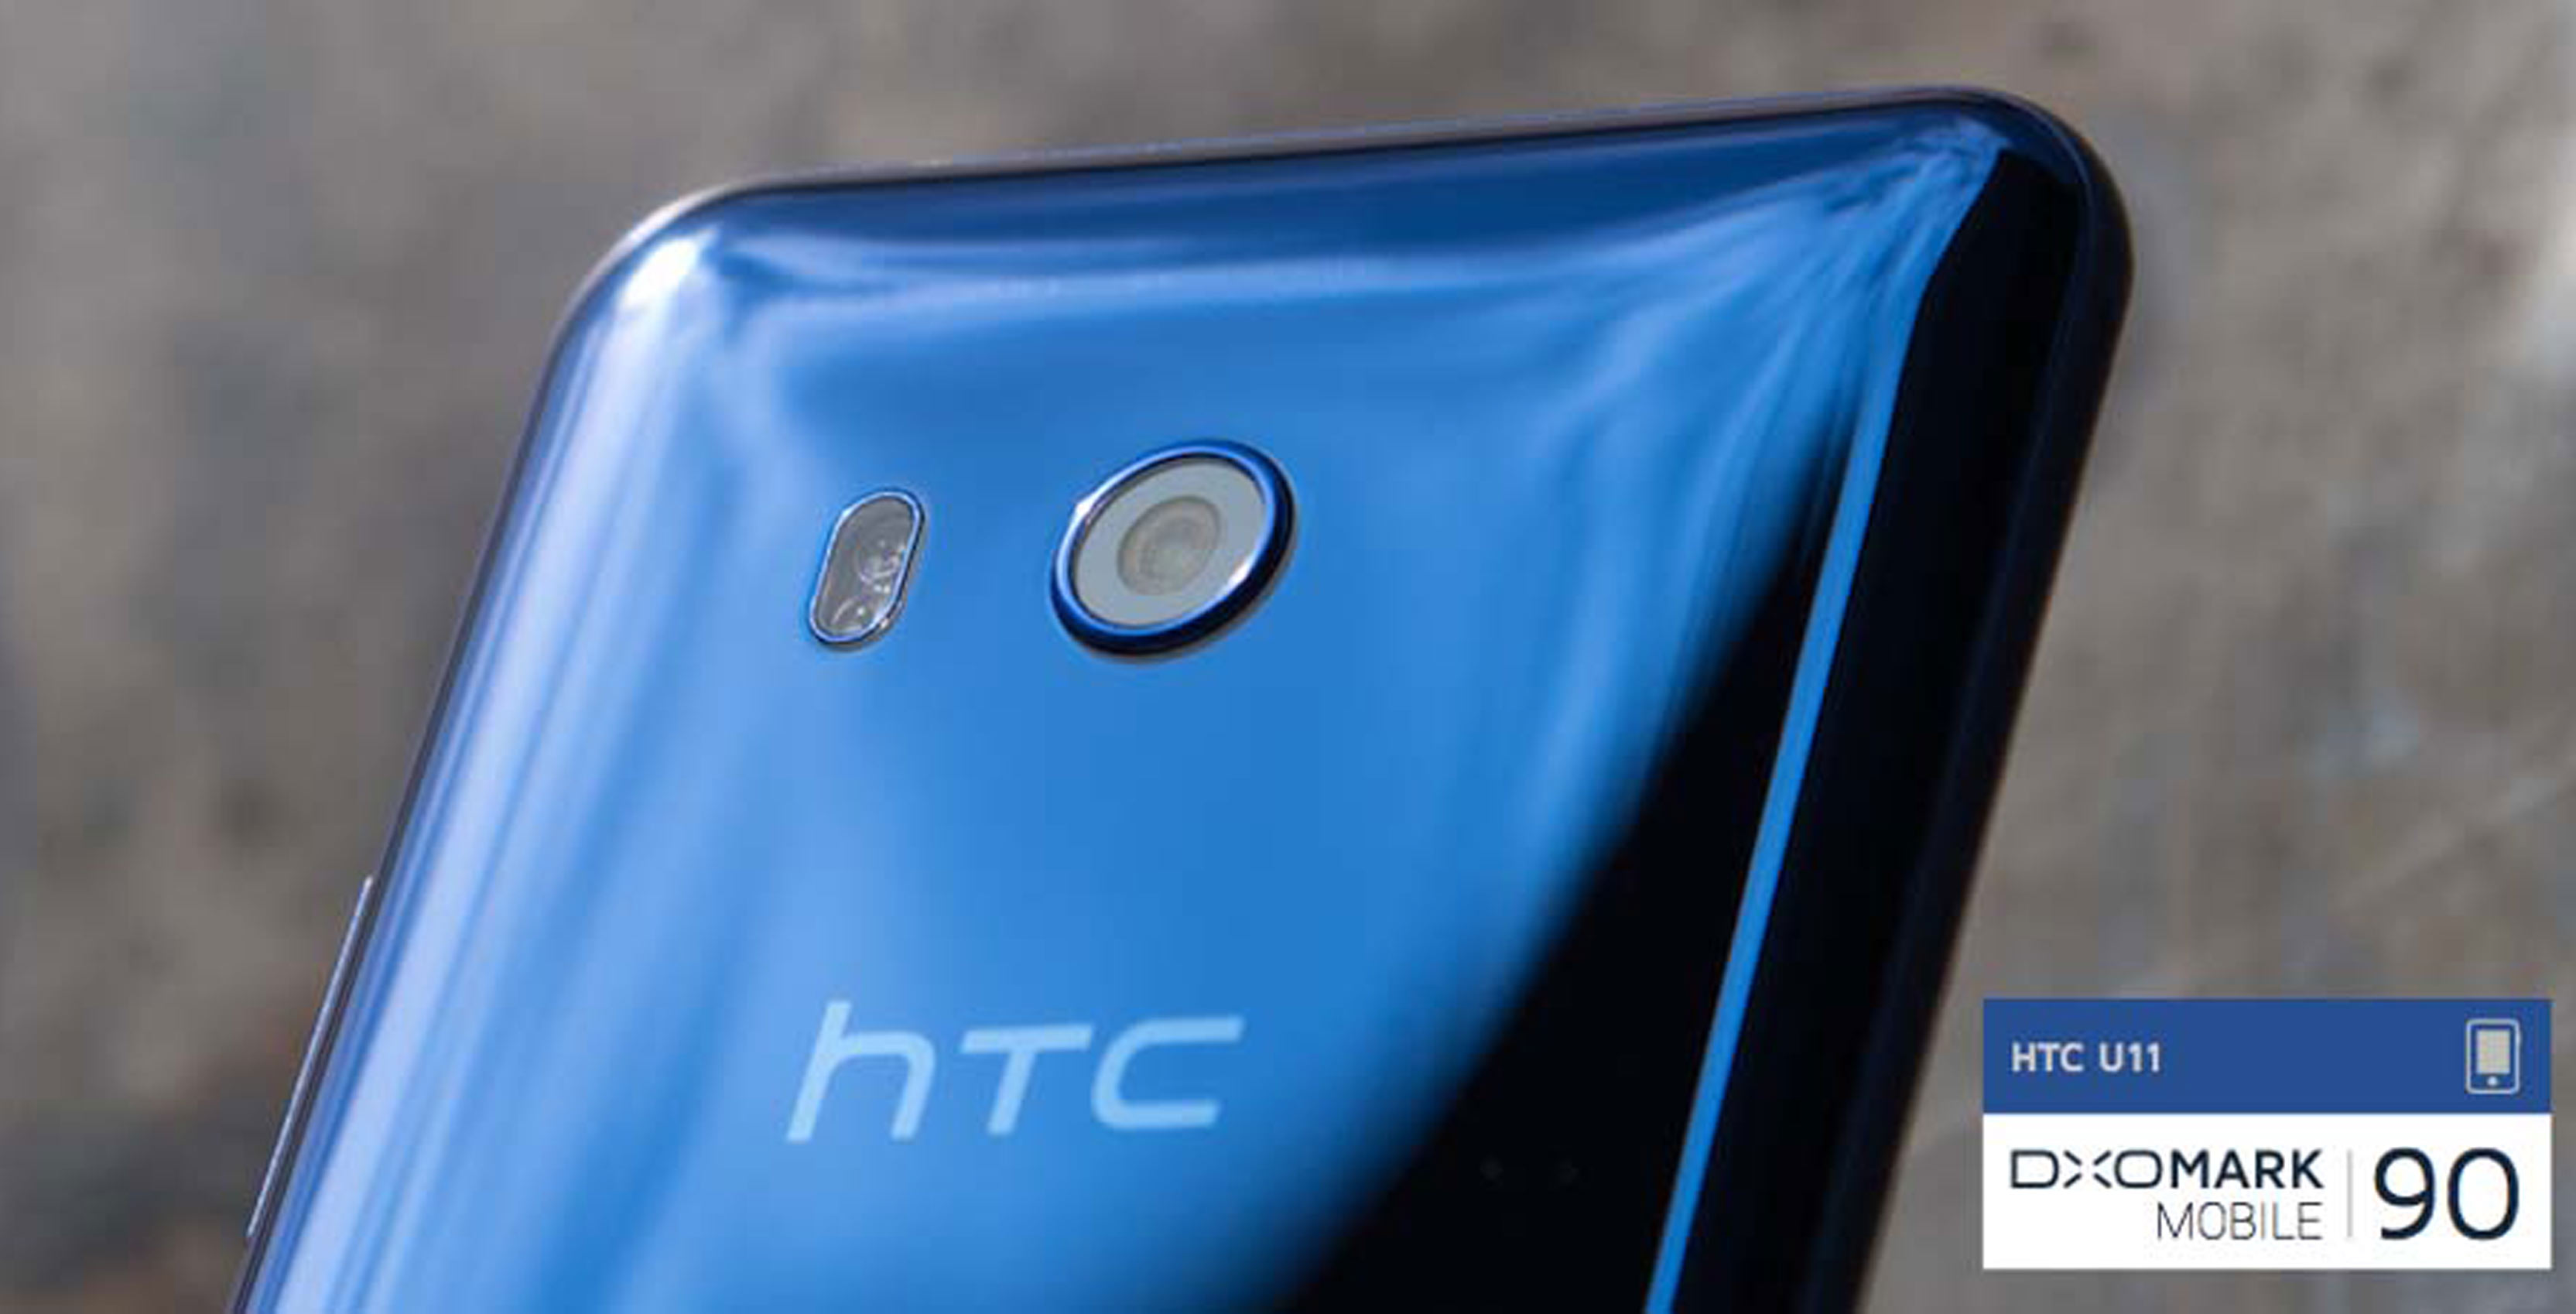 HTC U11 rear facing camera